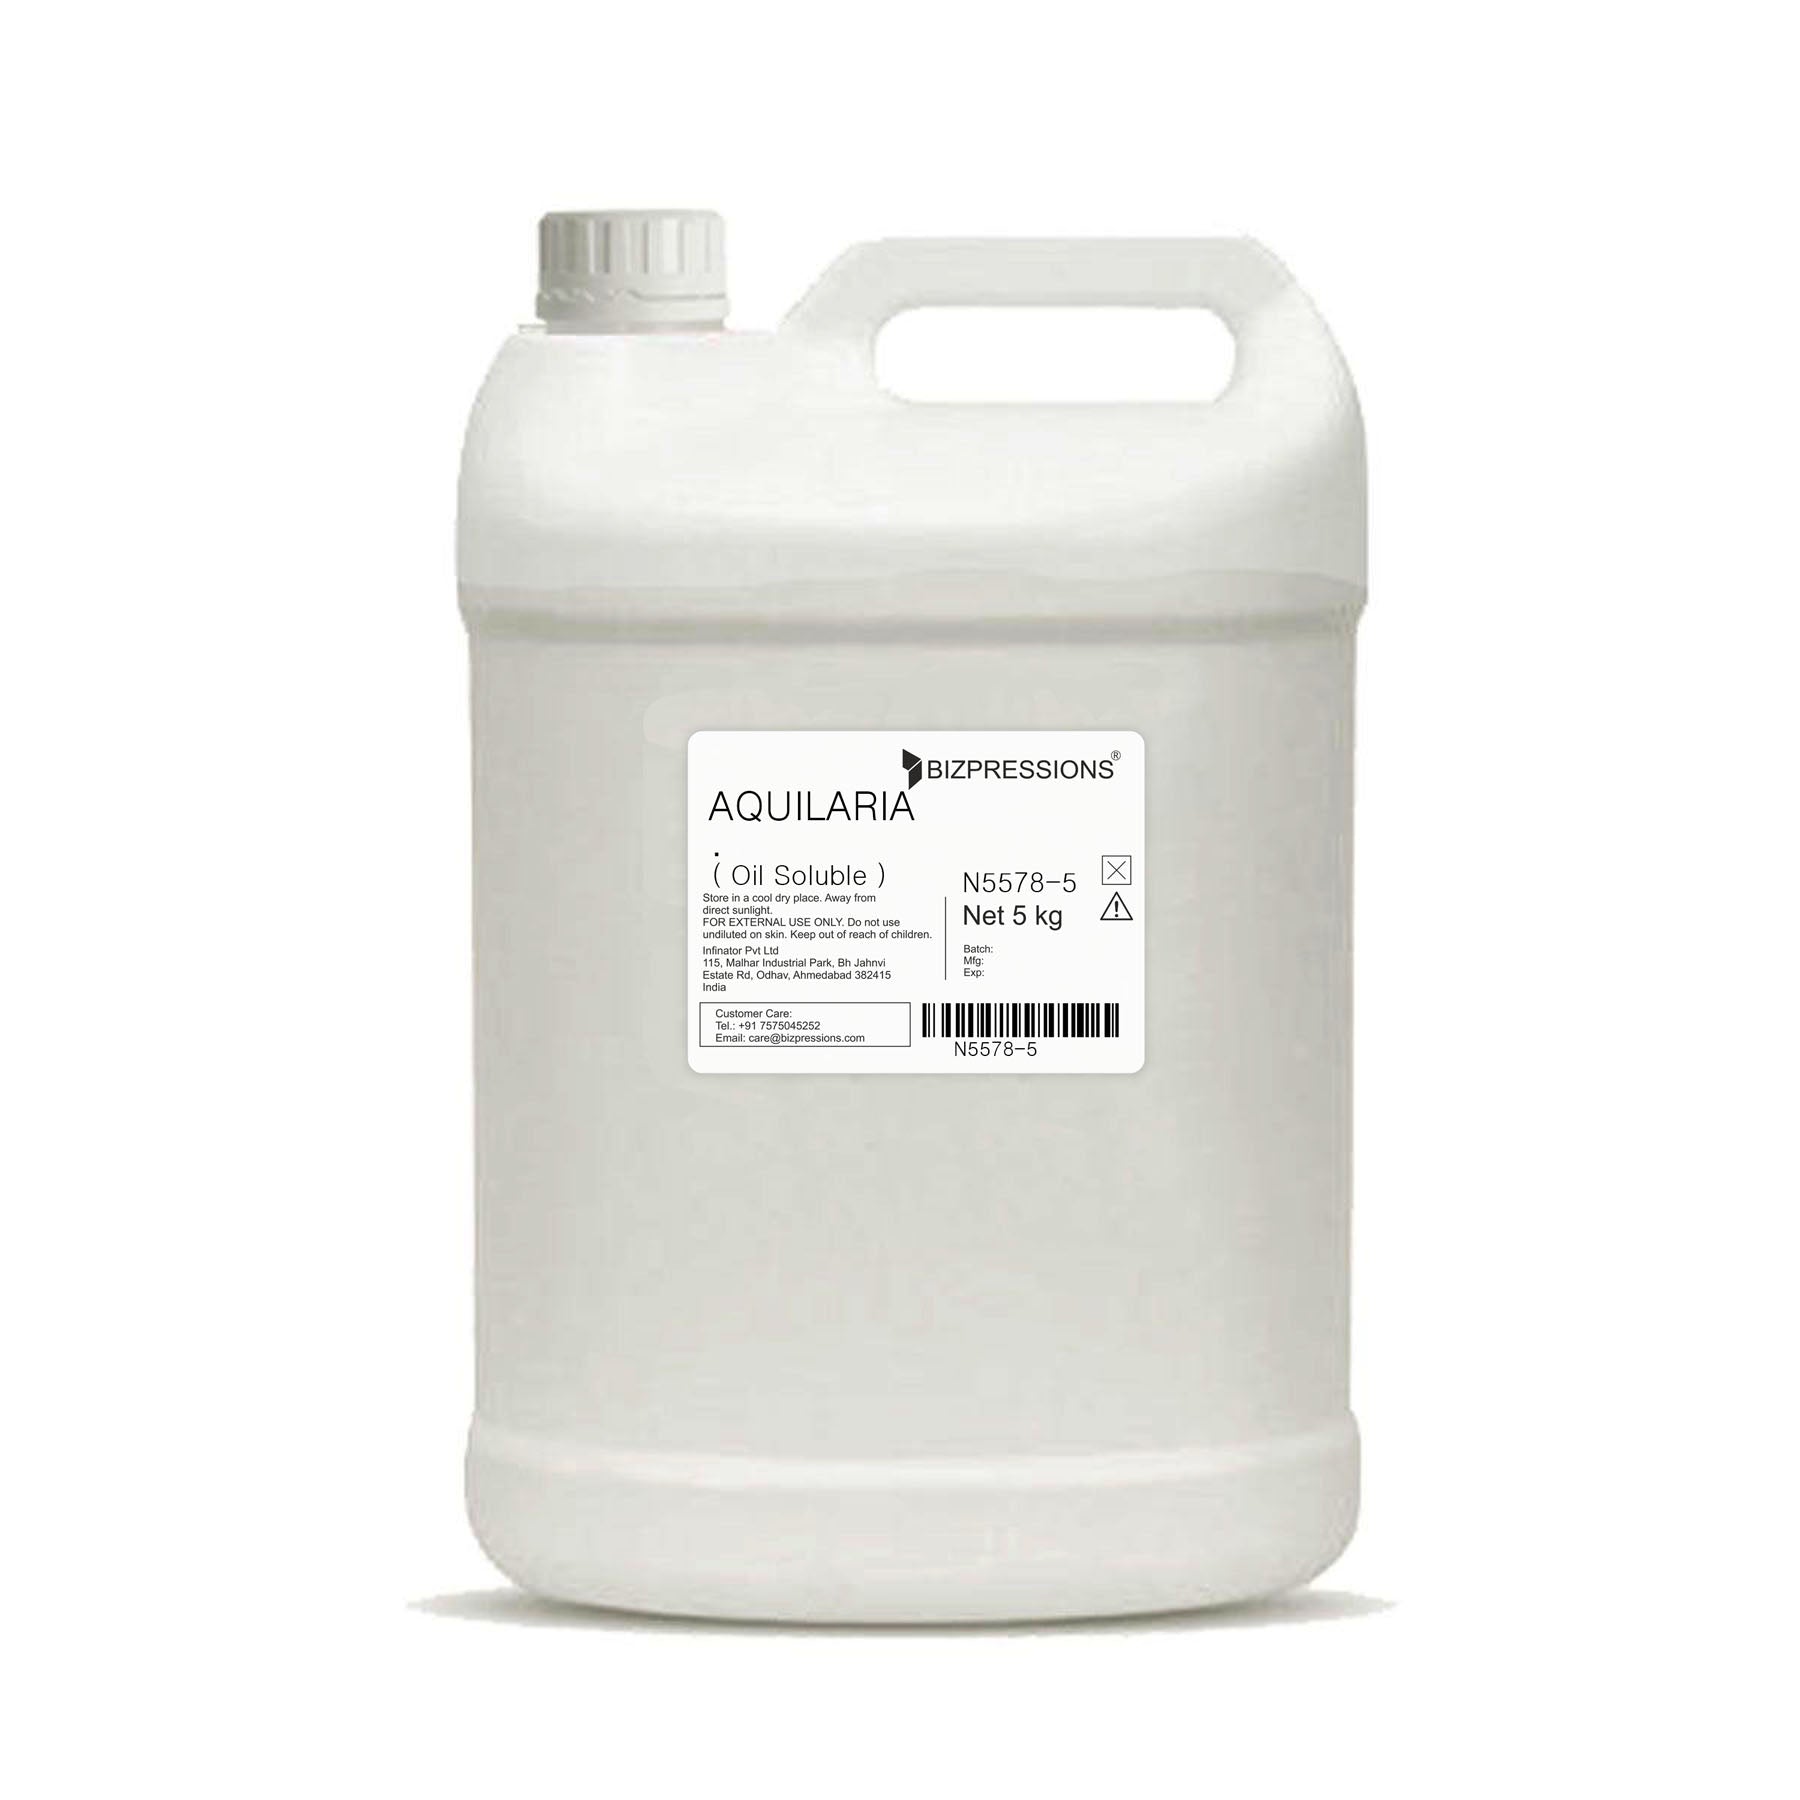 AQUILARIA - Fragrance ( Oil Soluble ) - 5 kg